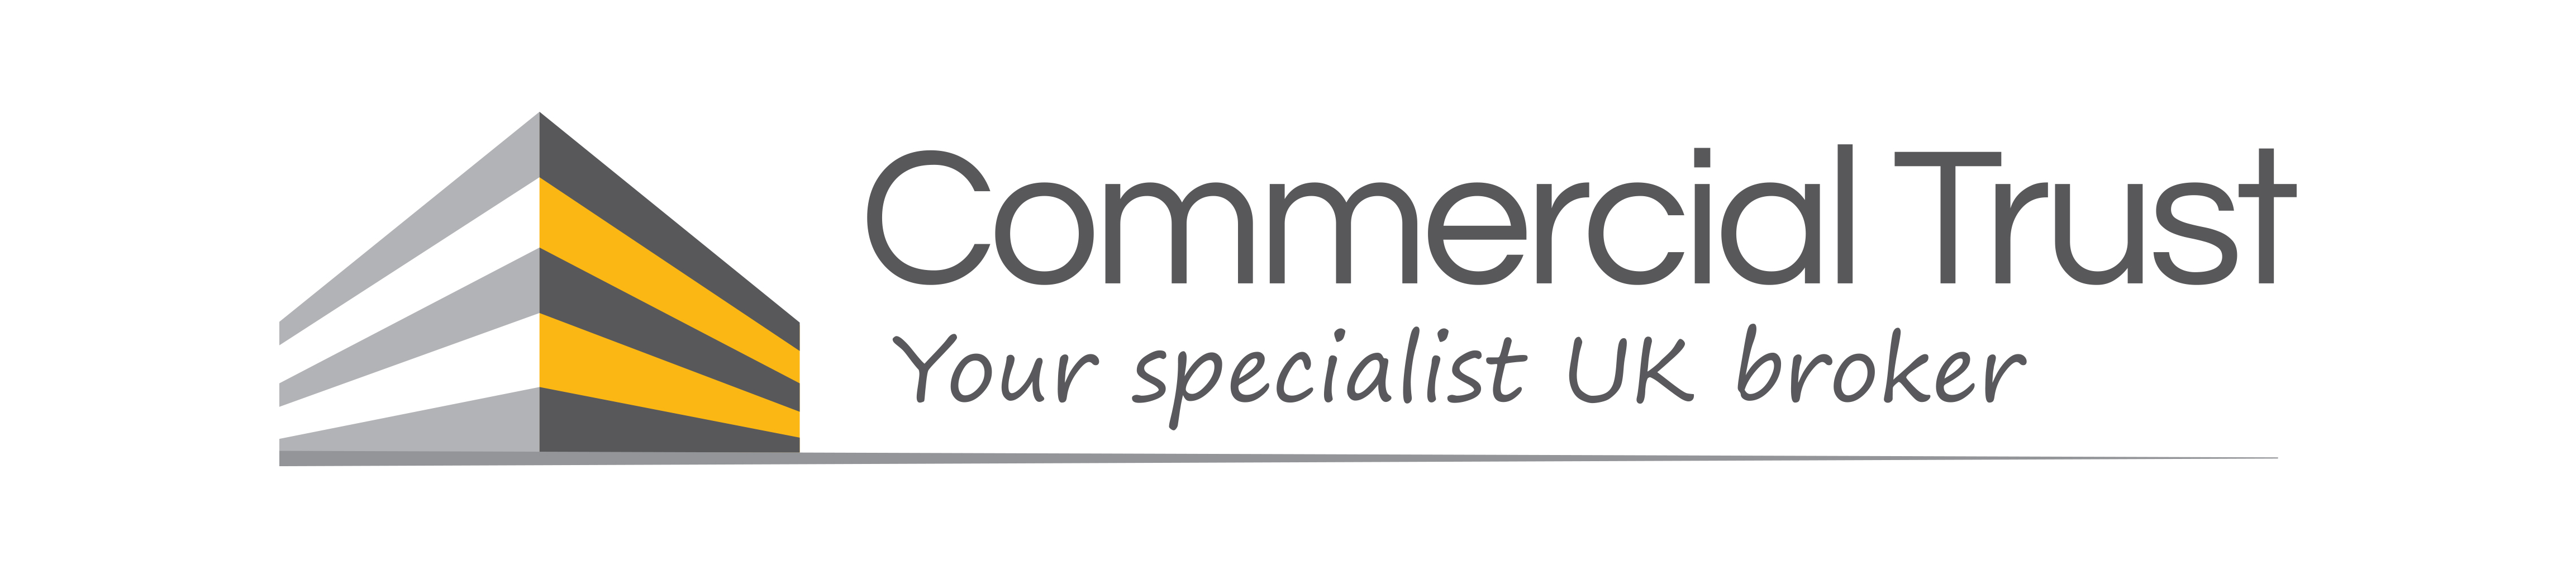 Commercial Trust Ltd